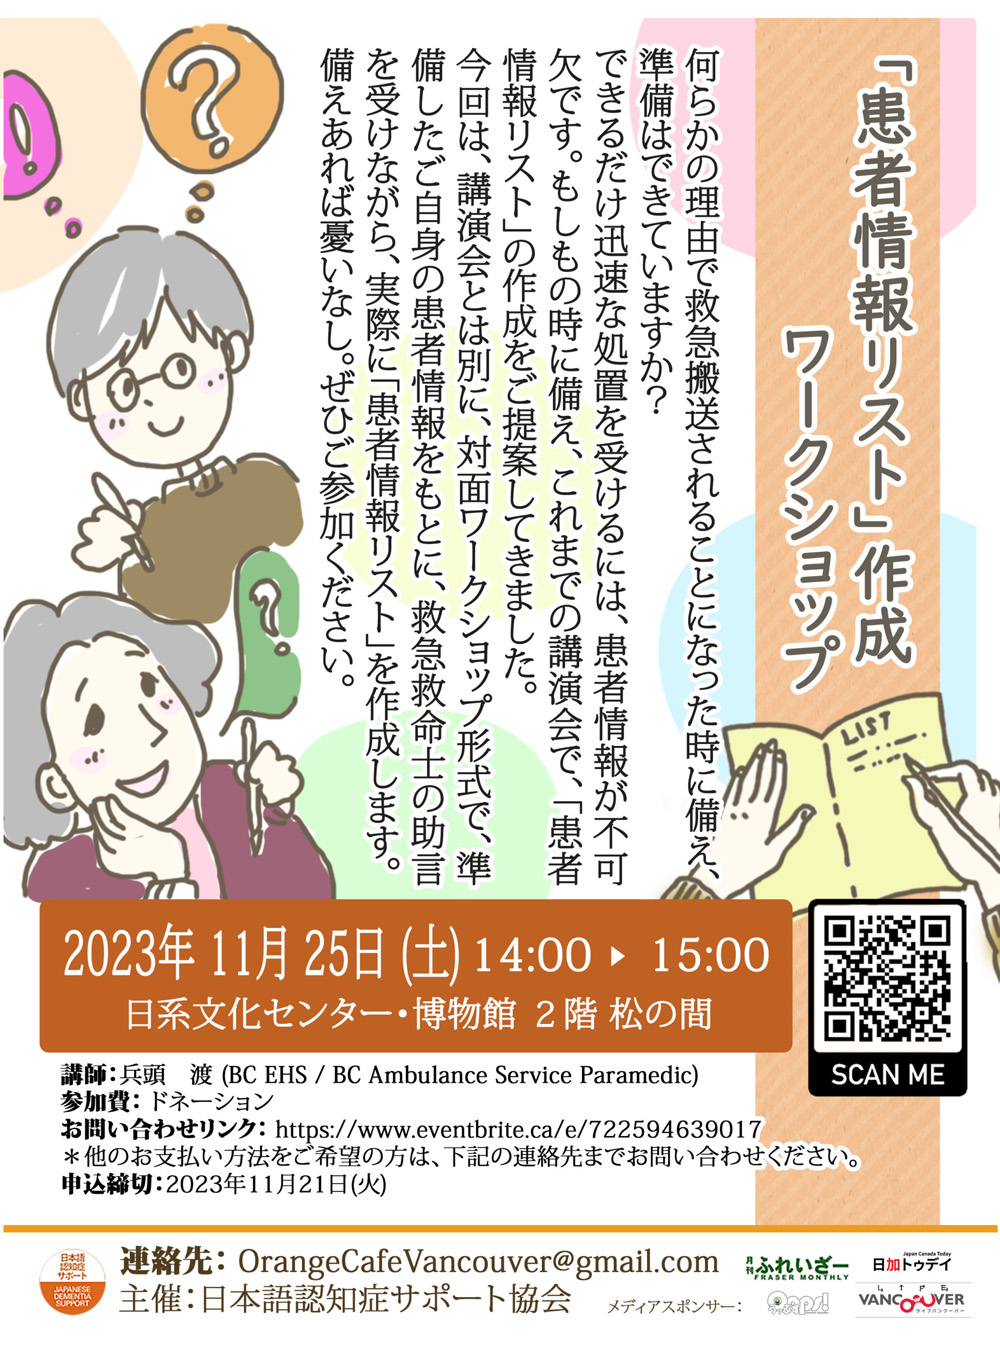 Japanese Dementia Support Association, Event